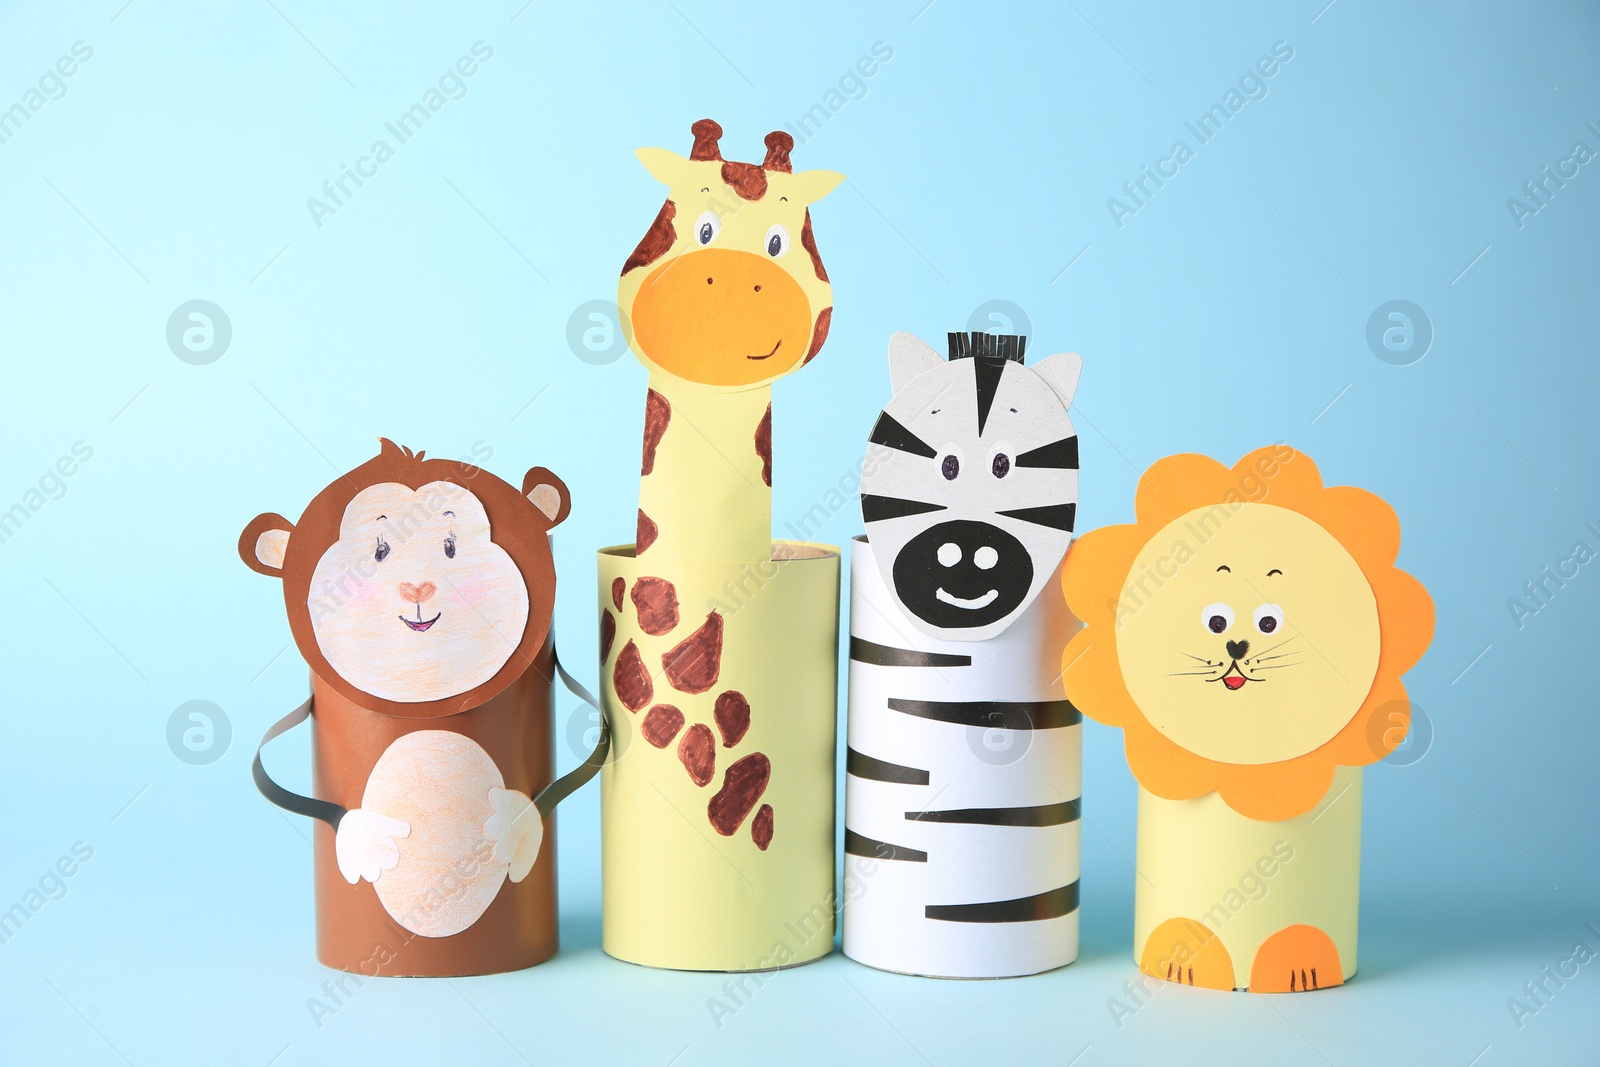 Photo of Toy monkey, giraffe, lion and zebra made from toilet paper hubs on light blue background. Children's handmade ideas